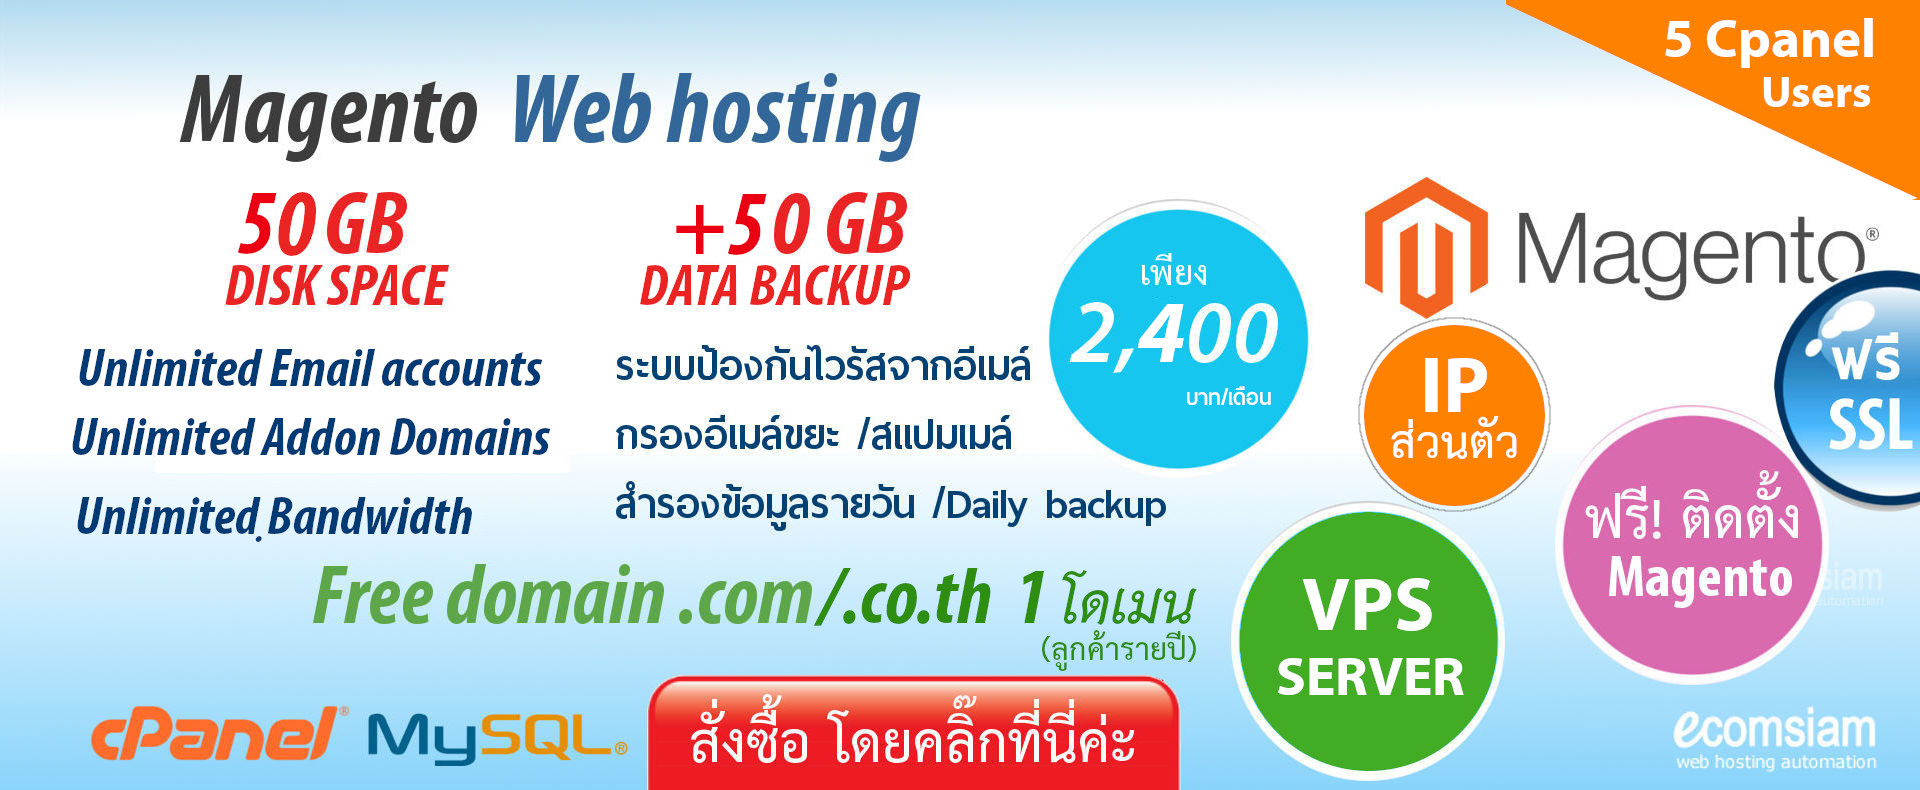 web hosting thailand แนะนำ magento web hosting - vps server เพียง 2,400 บ./เดือน  พิเศษสุดๆ ลูกค้ารายปีชำระเพียง 11 เดือน และ ฟรี จดโดเมน หรือต่ออายุโดเมนตลอดการใช้งาน เว็บโฮสติ้งไทย ฟรี โดเมน ฟรี SSL ฟรีติดตั้ง แนะนำเว็บโฮสติ้ง บริการลูกค้า  Support ดูแลดี โดย thailandwebhost.com - magento web hosting thailand free domain